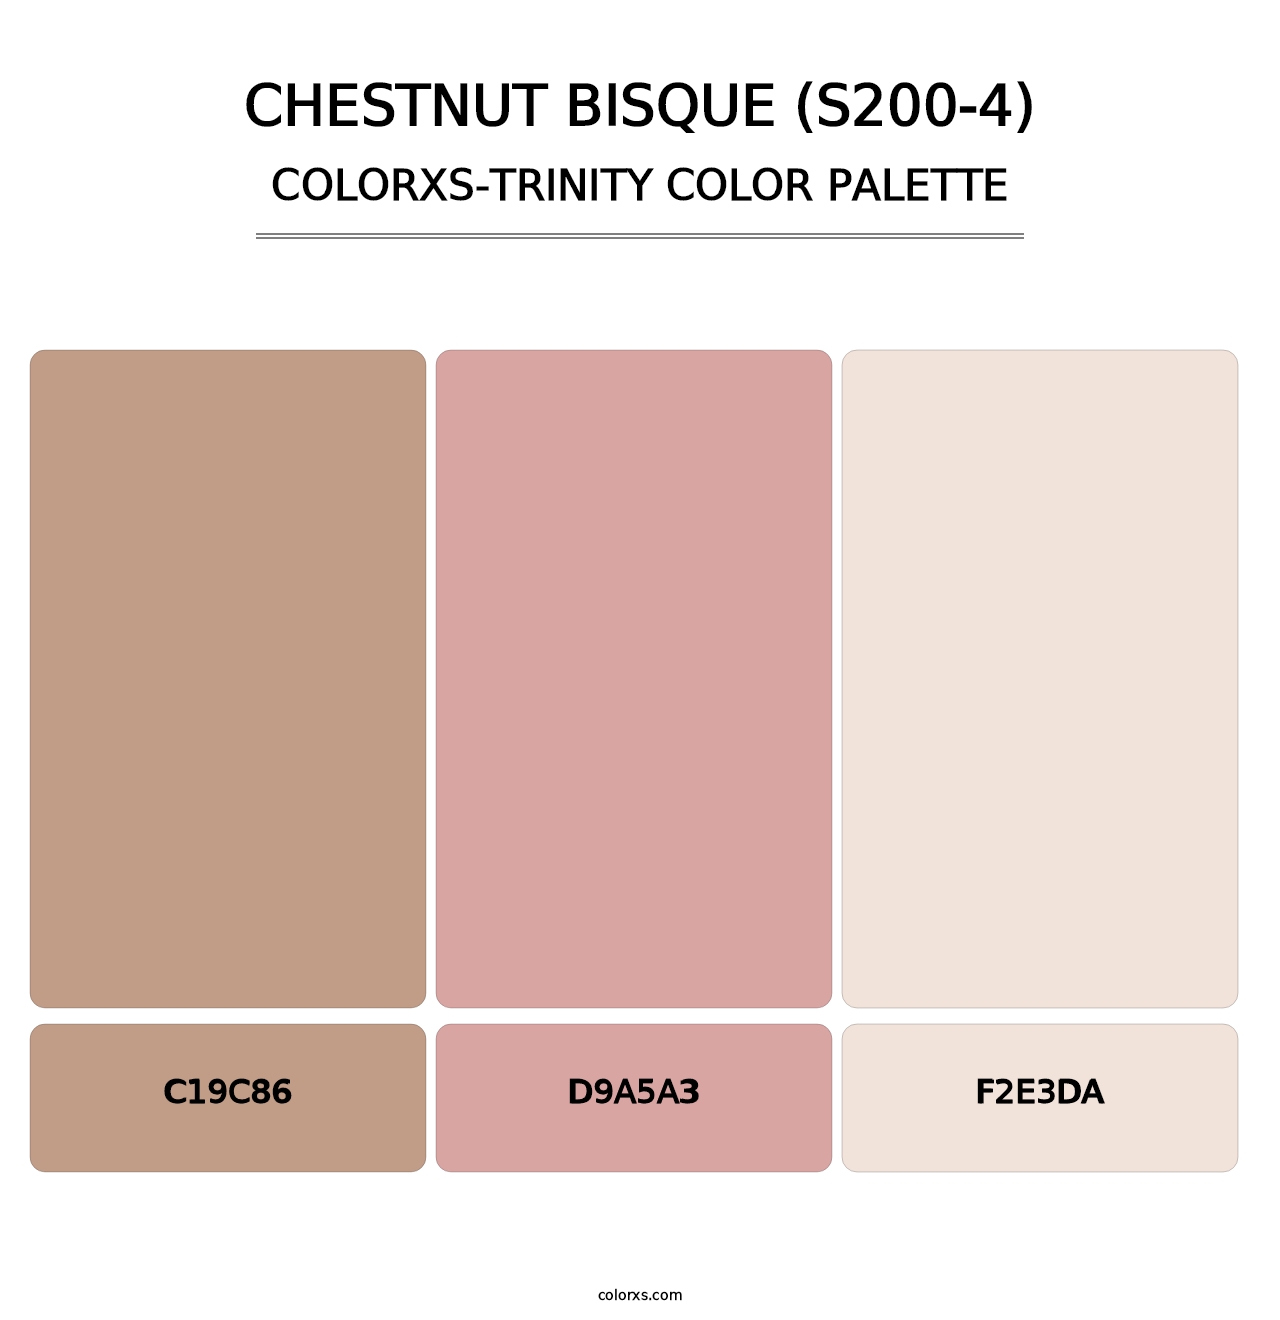 Chestnut Bisque (S200-4) - Colorxs Trinity Palette